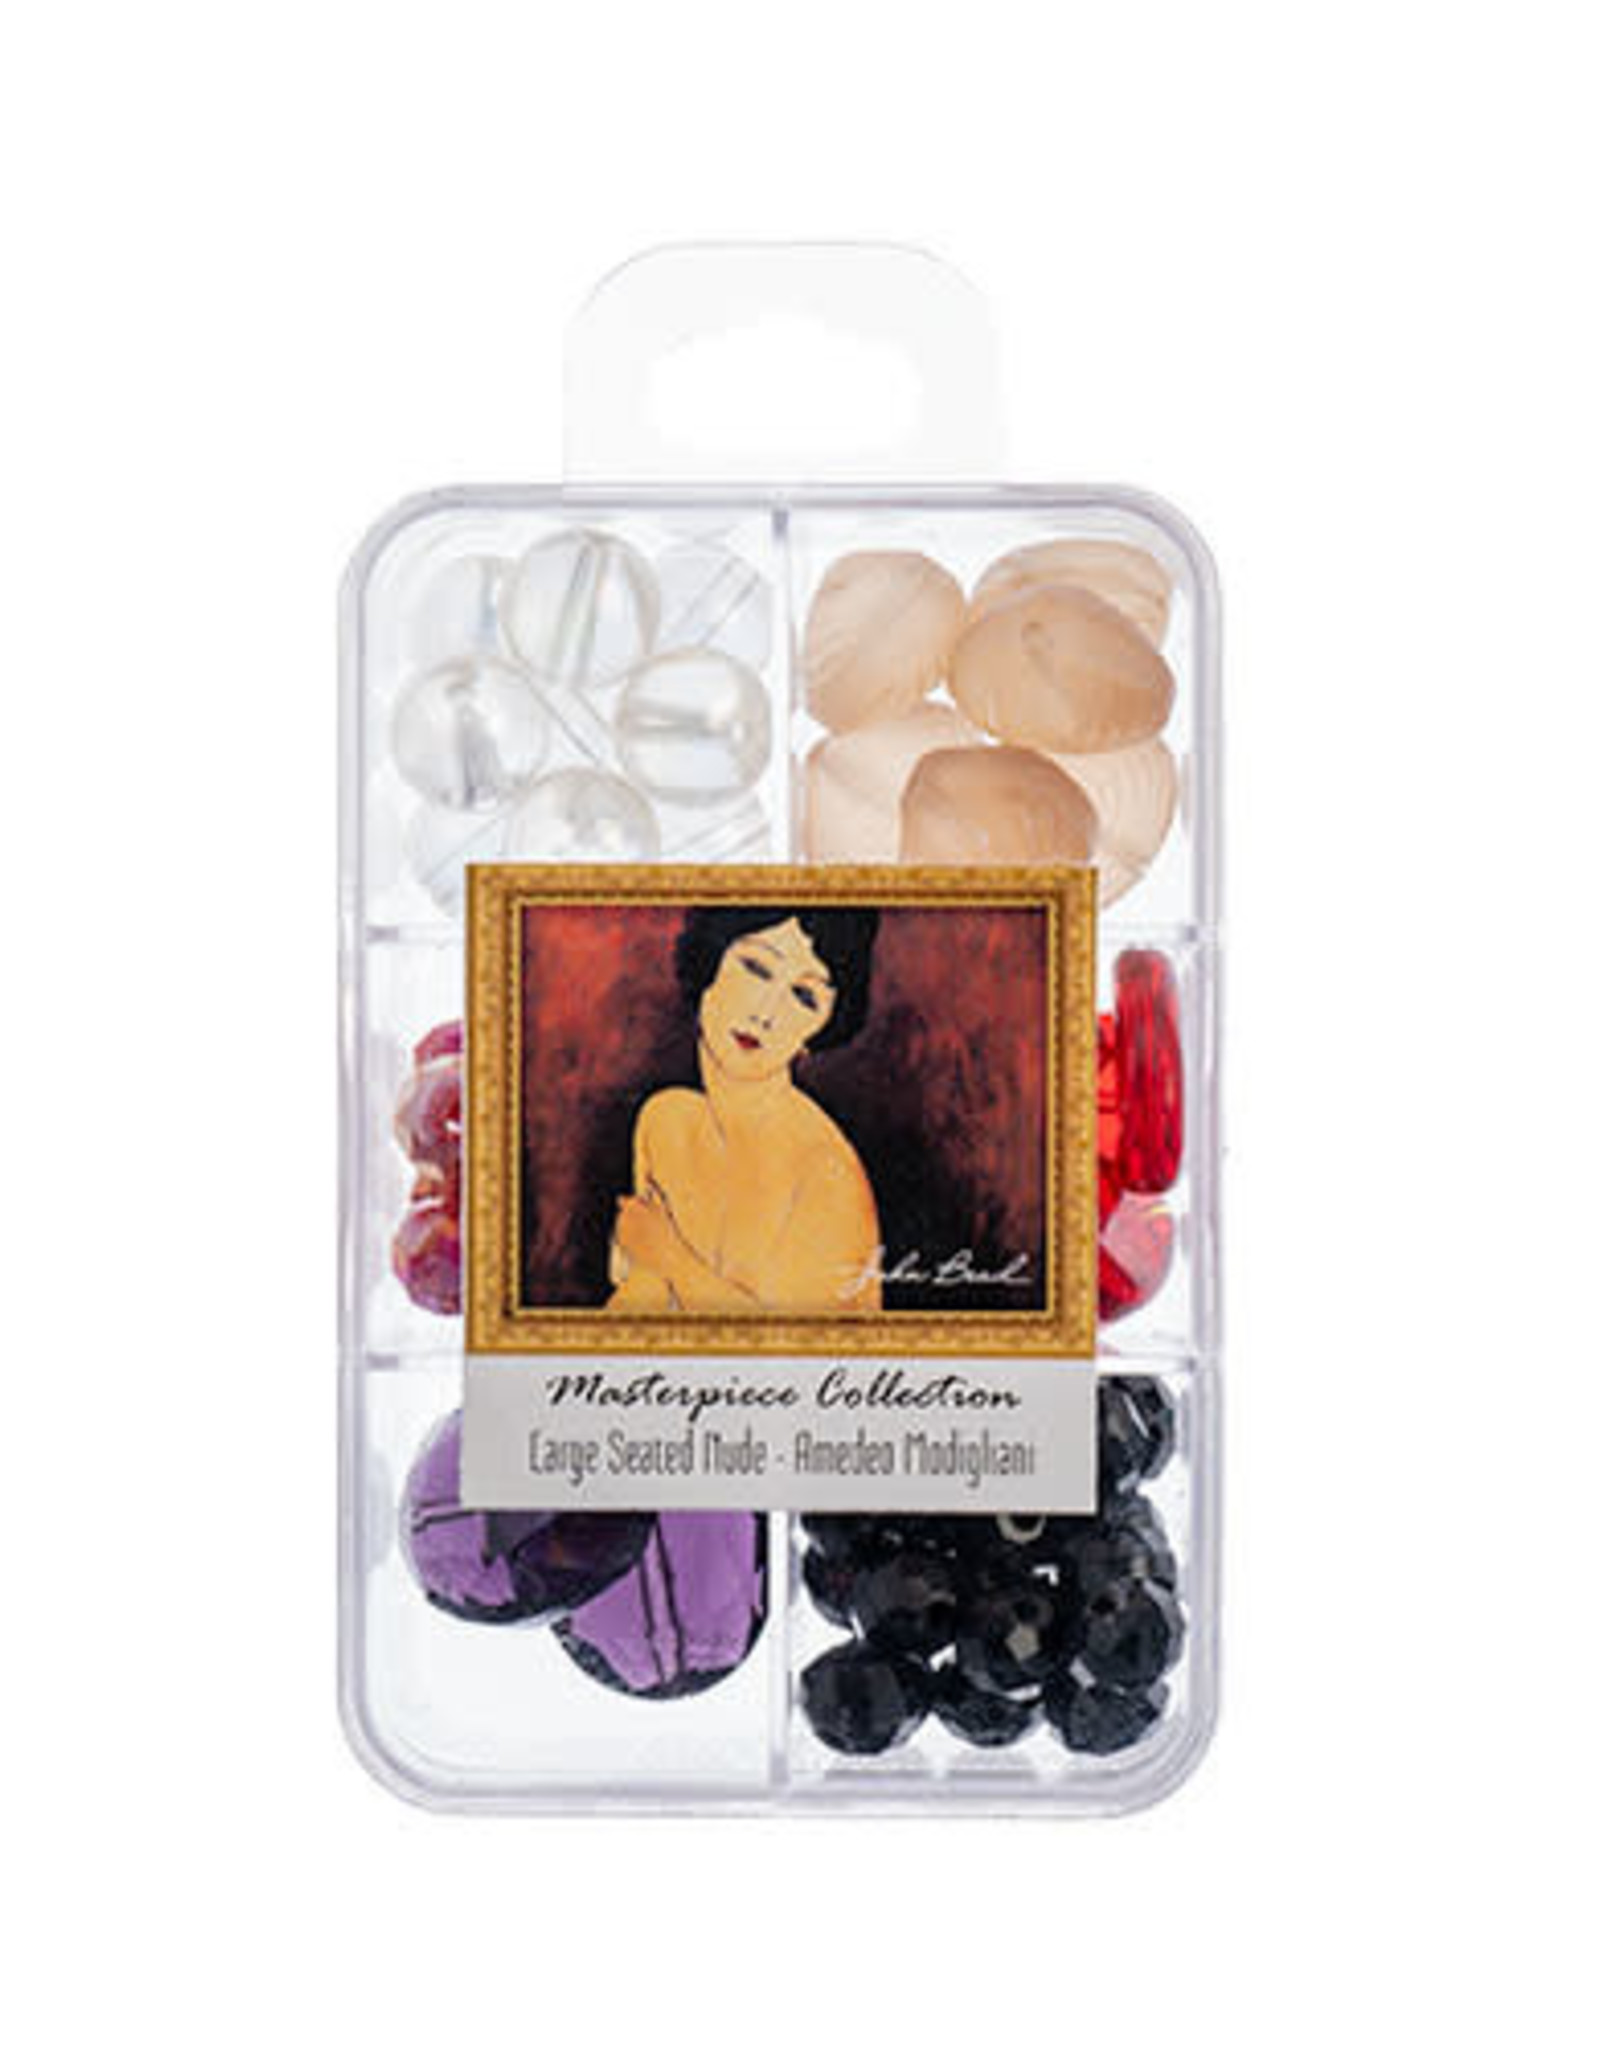 Masterpiece Collection Glass Beads Masterpiece Collection Glass Bead Box Mix apx85g Large Seated Nude - Amedeo Modigliani